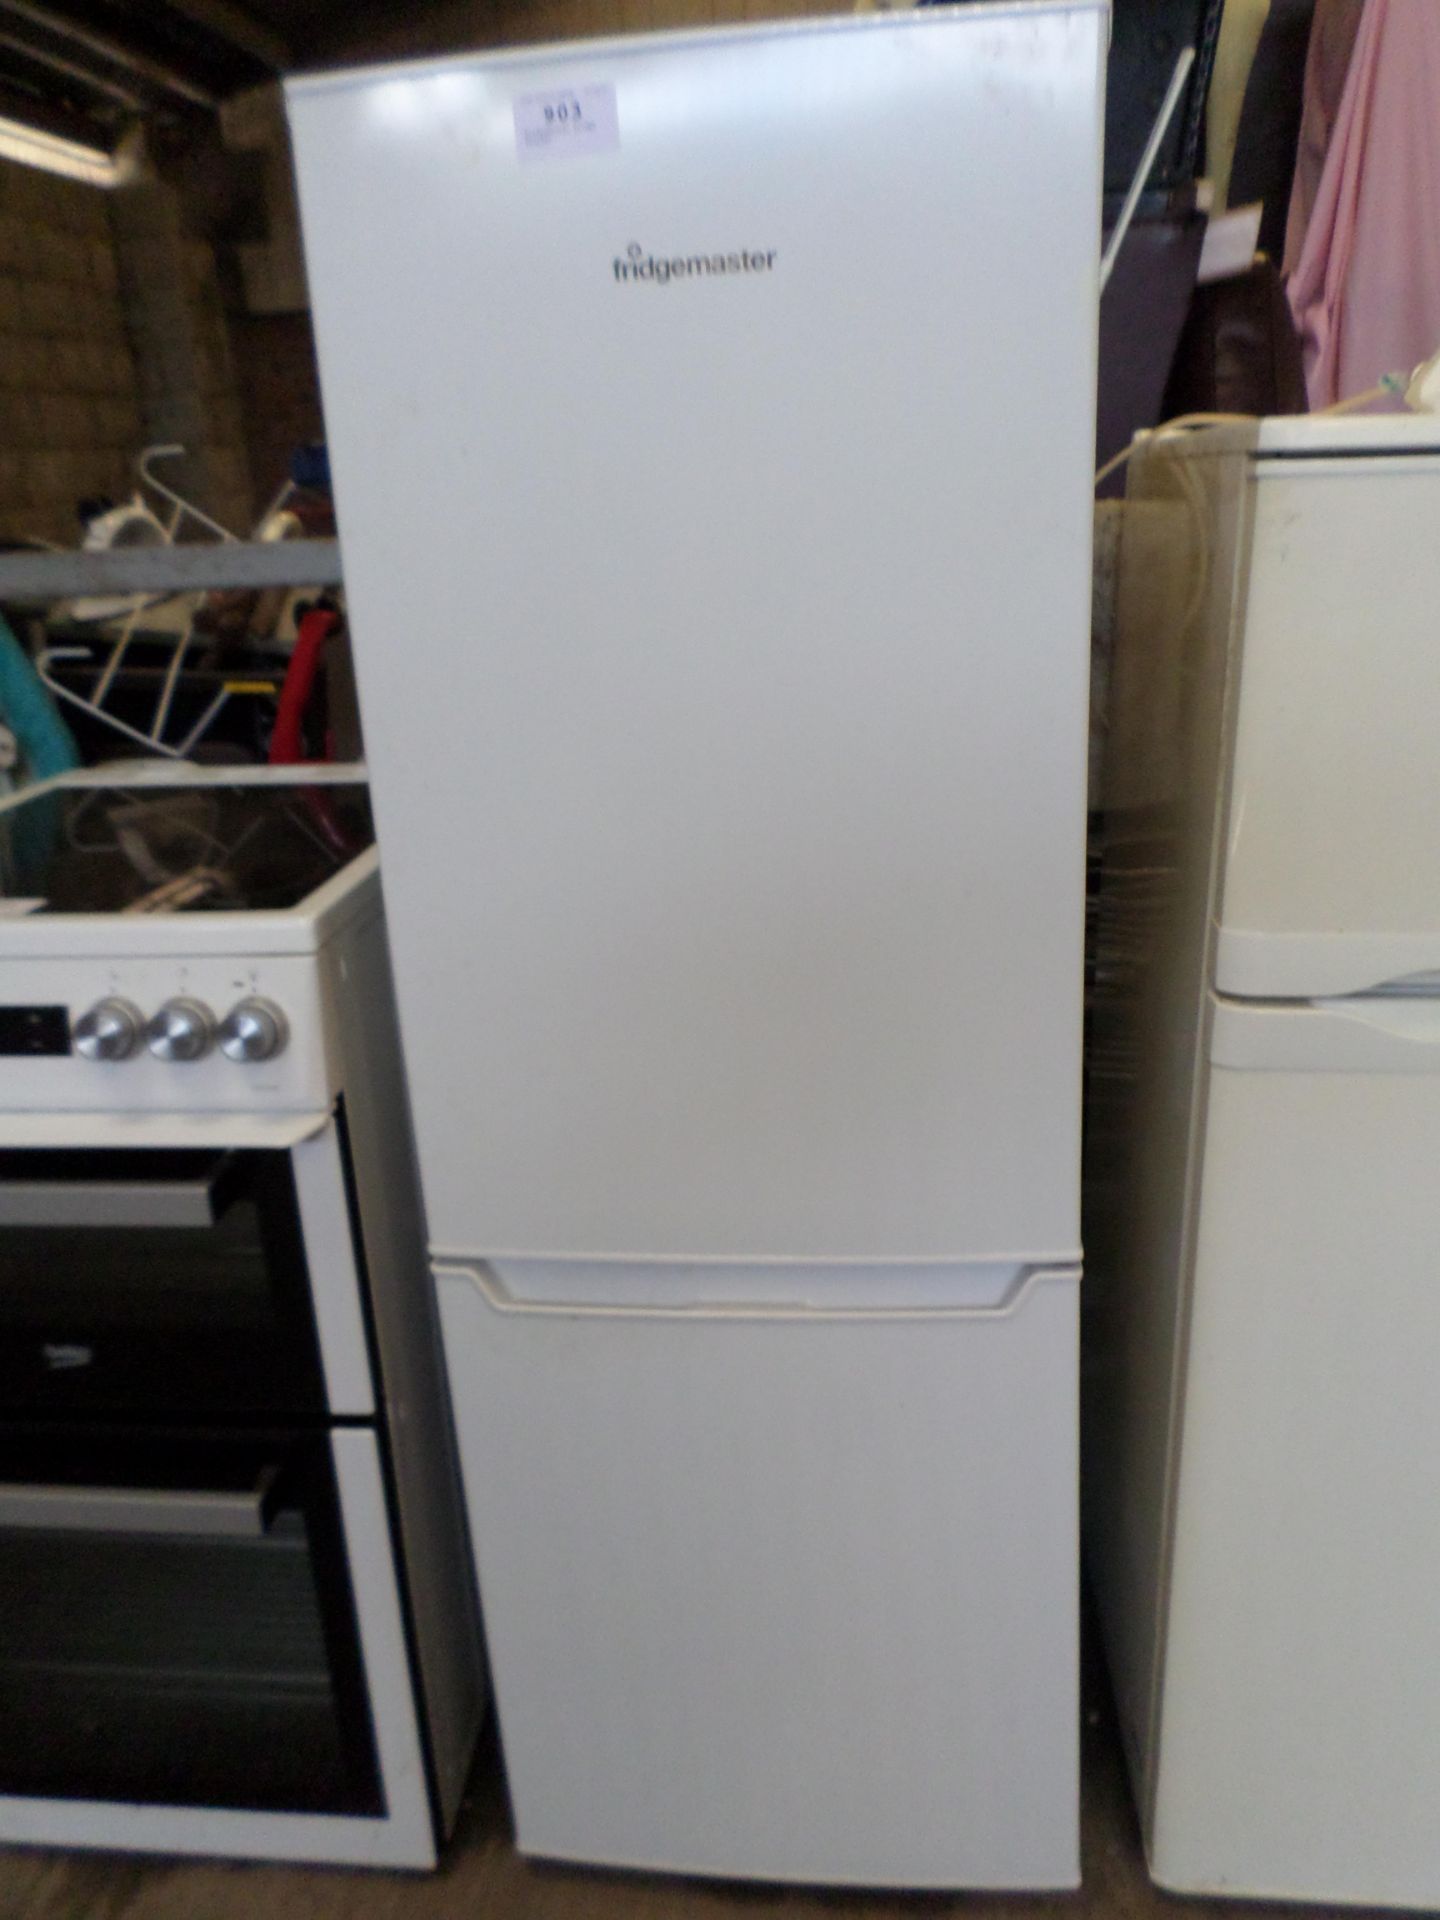 Fridgemaster fridge freezer